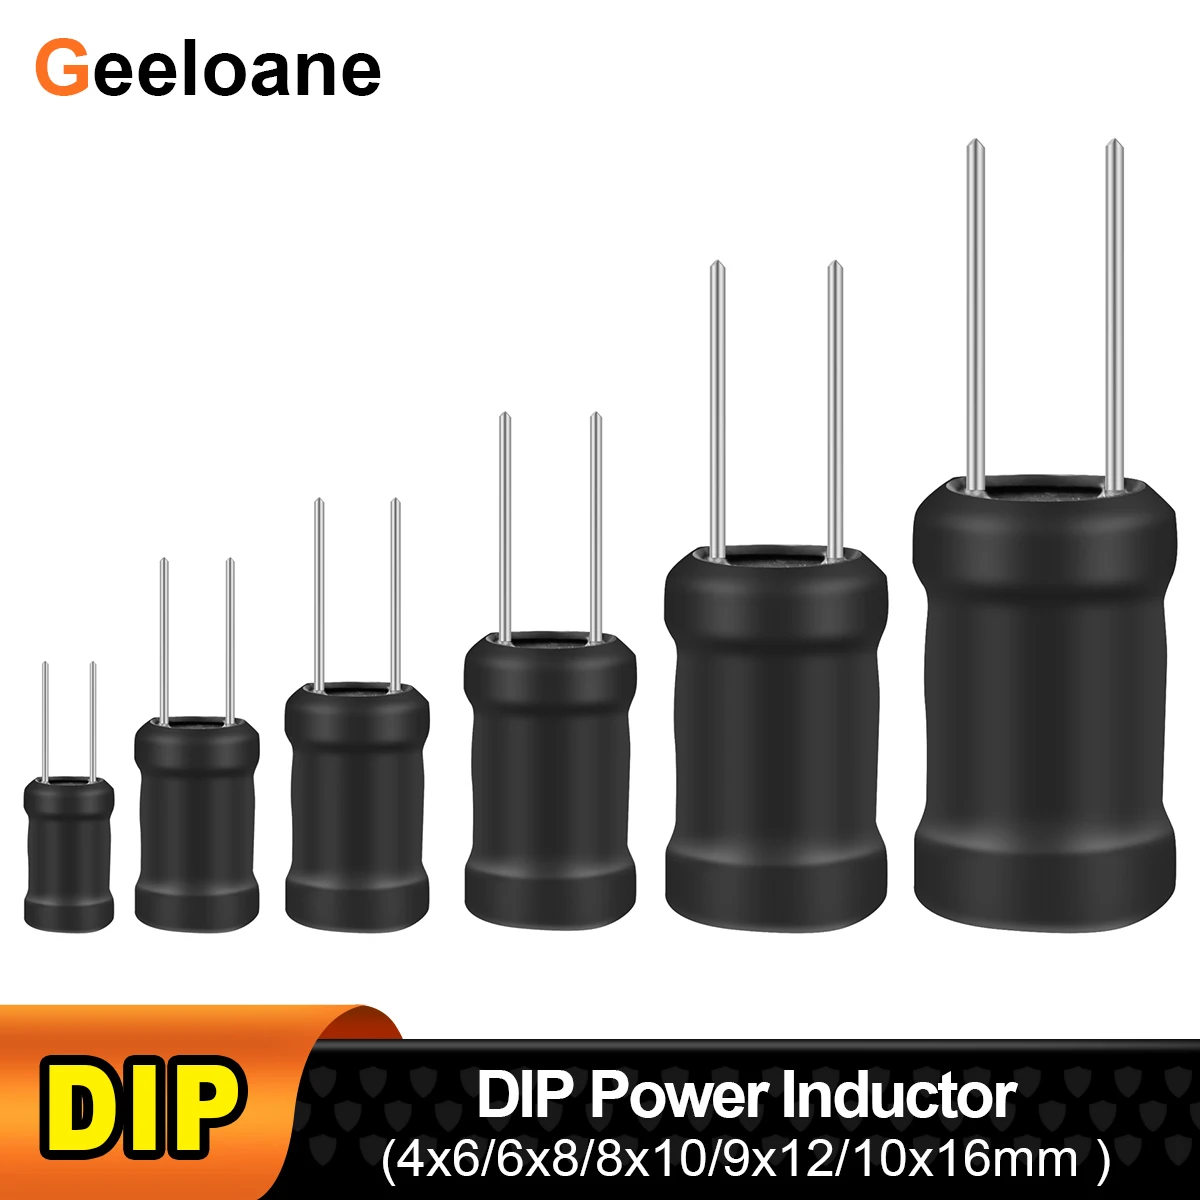 

20Pcs DIP Power Inductor 4x6 6x8 8x10 9x12 10x16 I-shape Inductance Ferrite Core Copper Coil 2.2UH 3.3UH 4.7UH 10UH 15UH 22UH